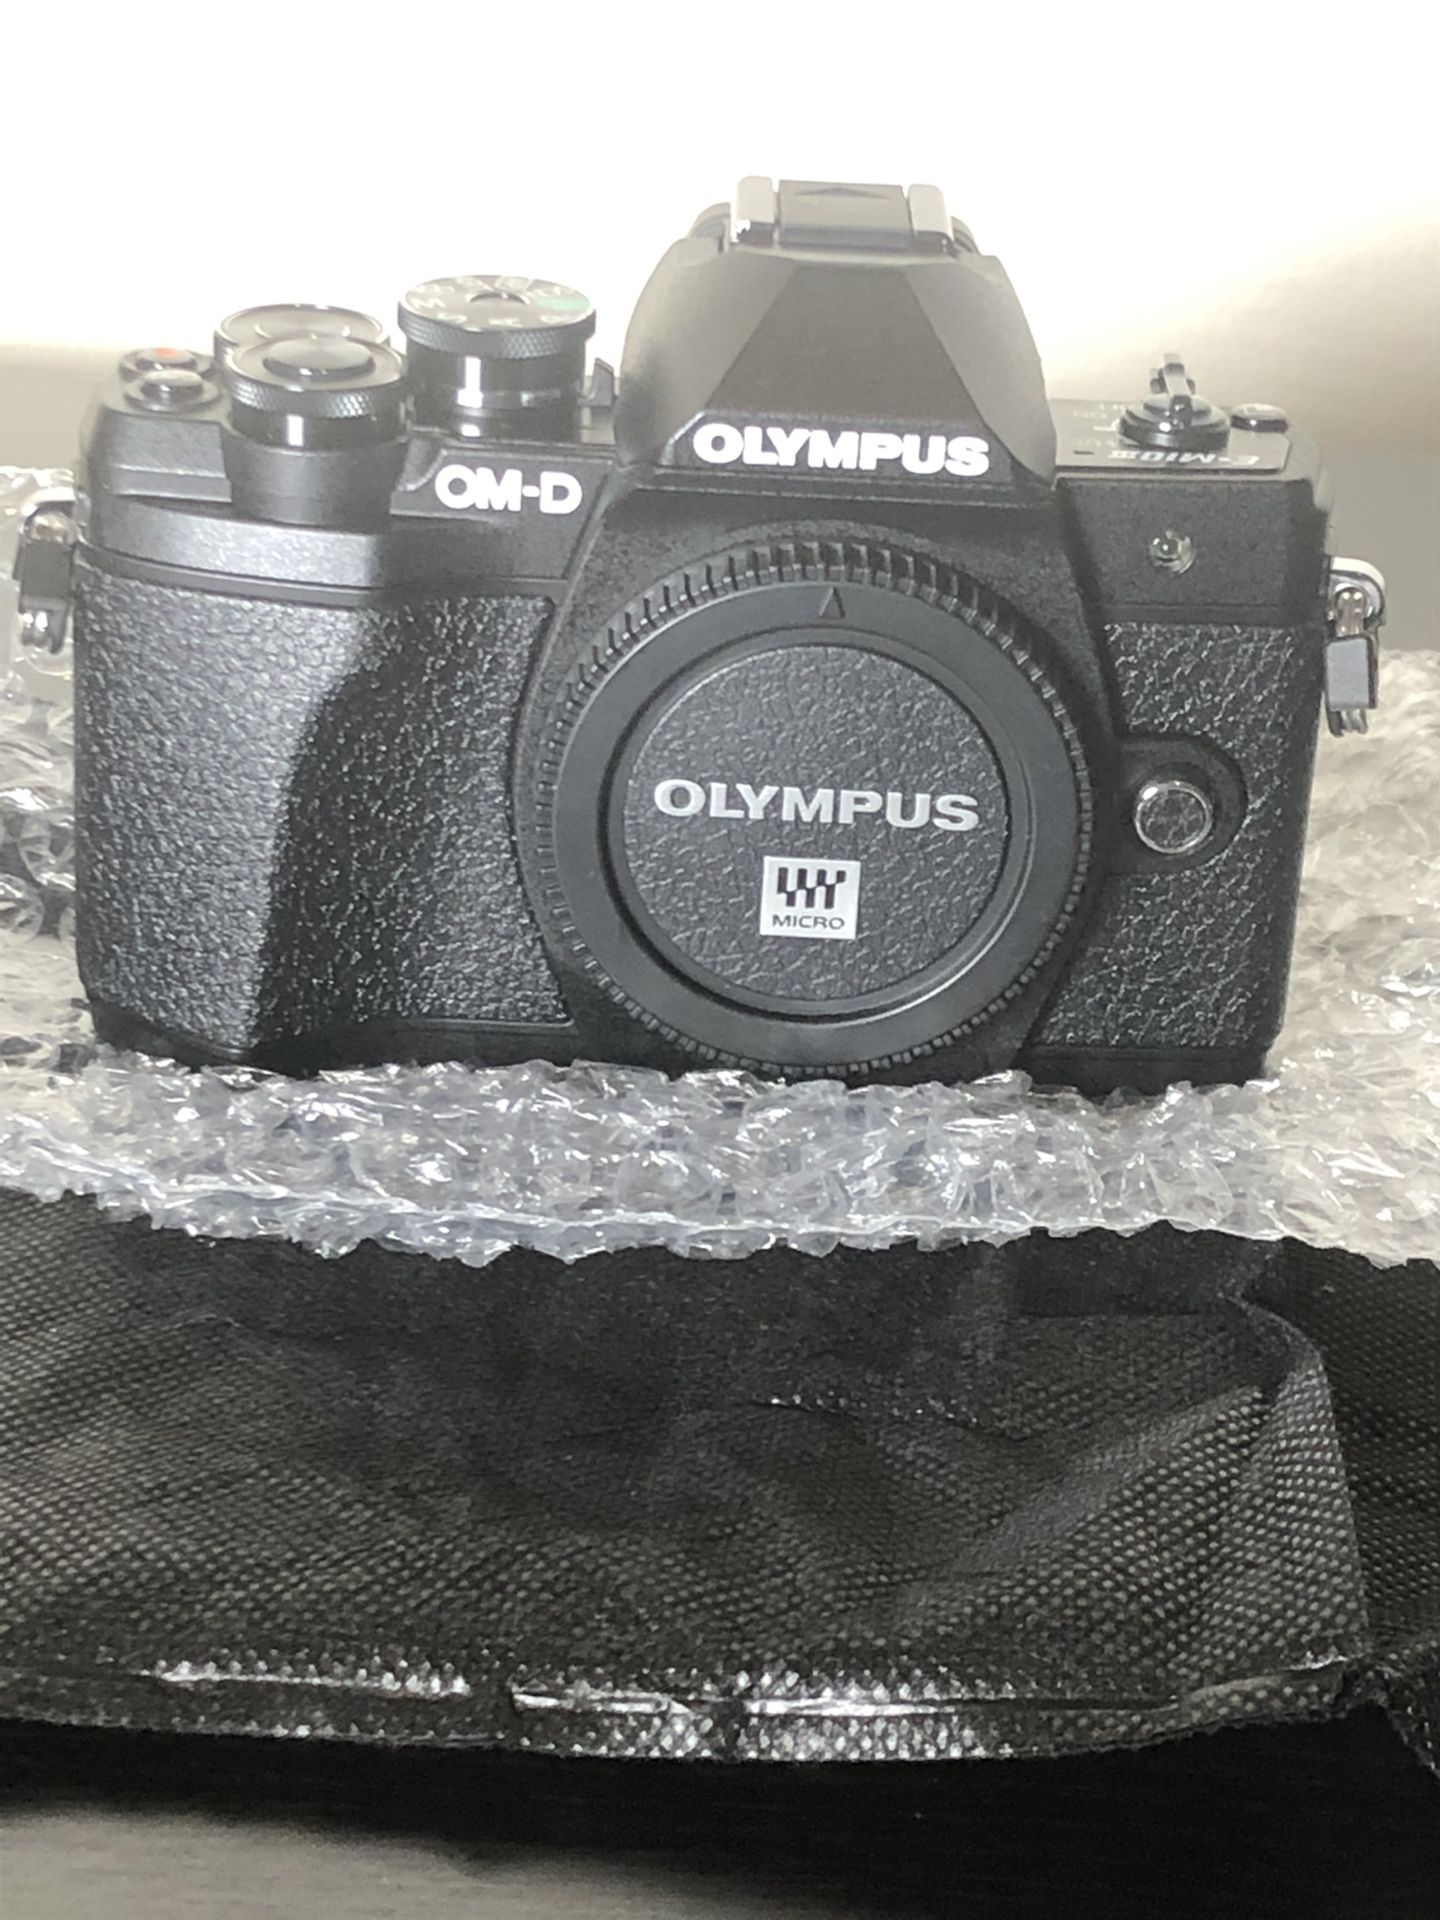 Olympus OM-D E-M10 Mark III Digital Camera With 12-200mm Lens.